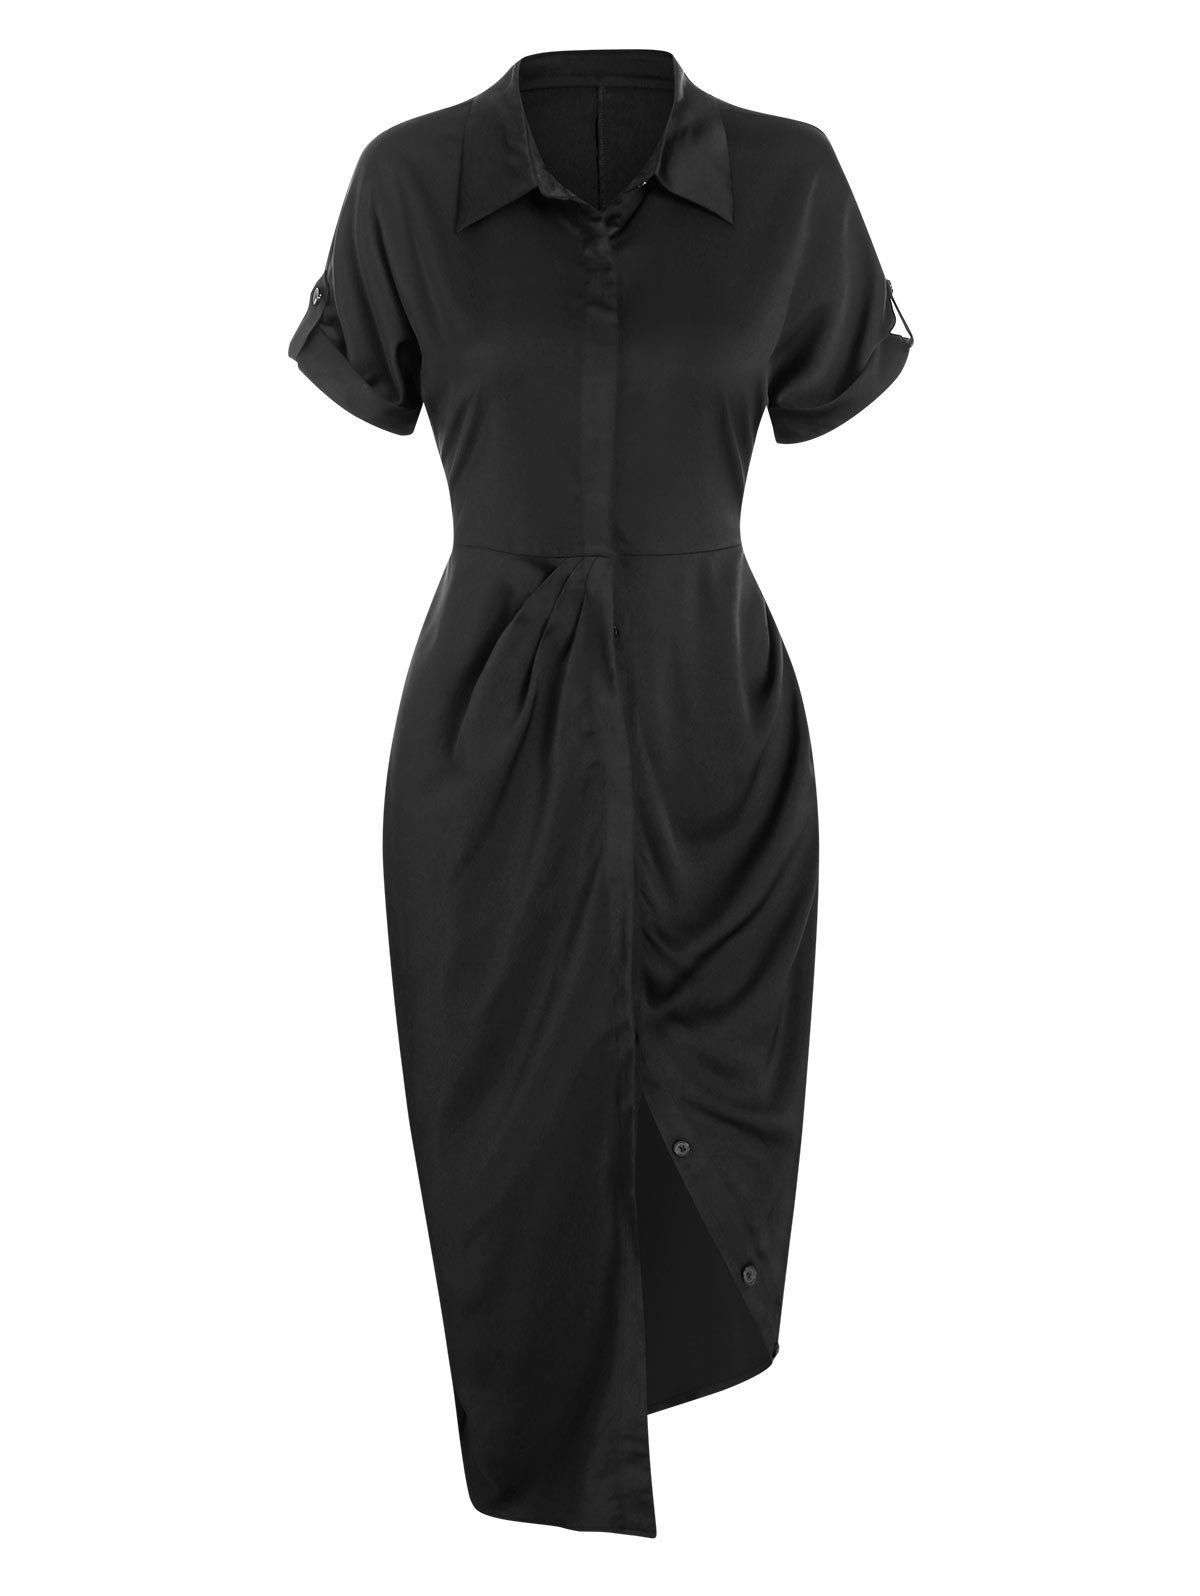 Ruched Asymmetrical Shirt Dress - BLACK XL